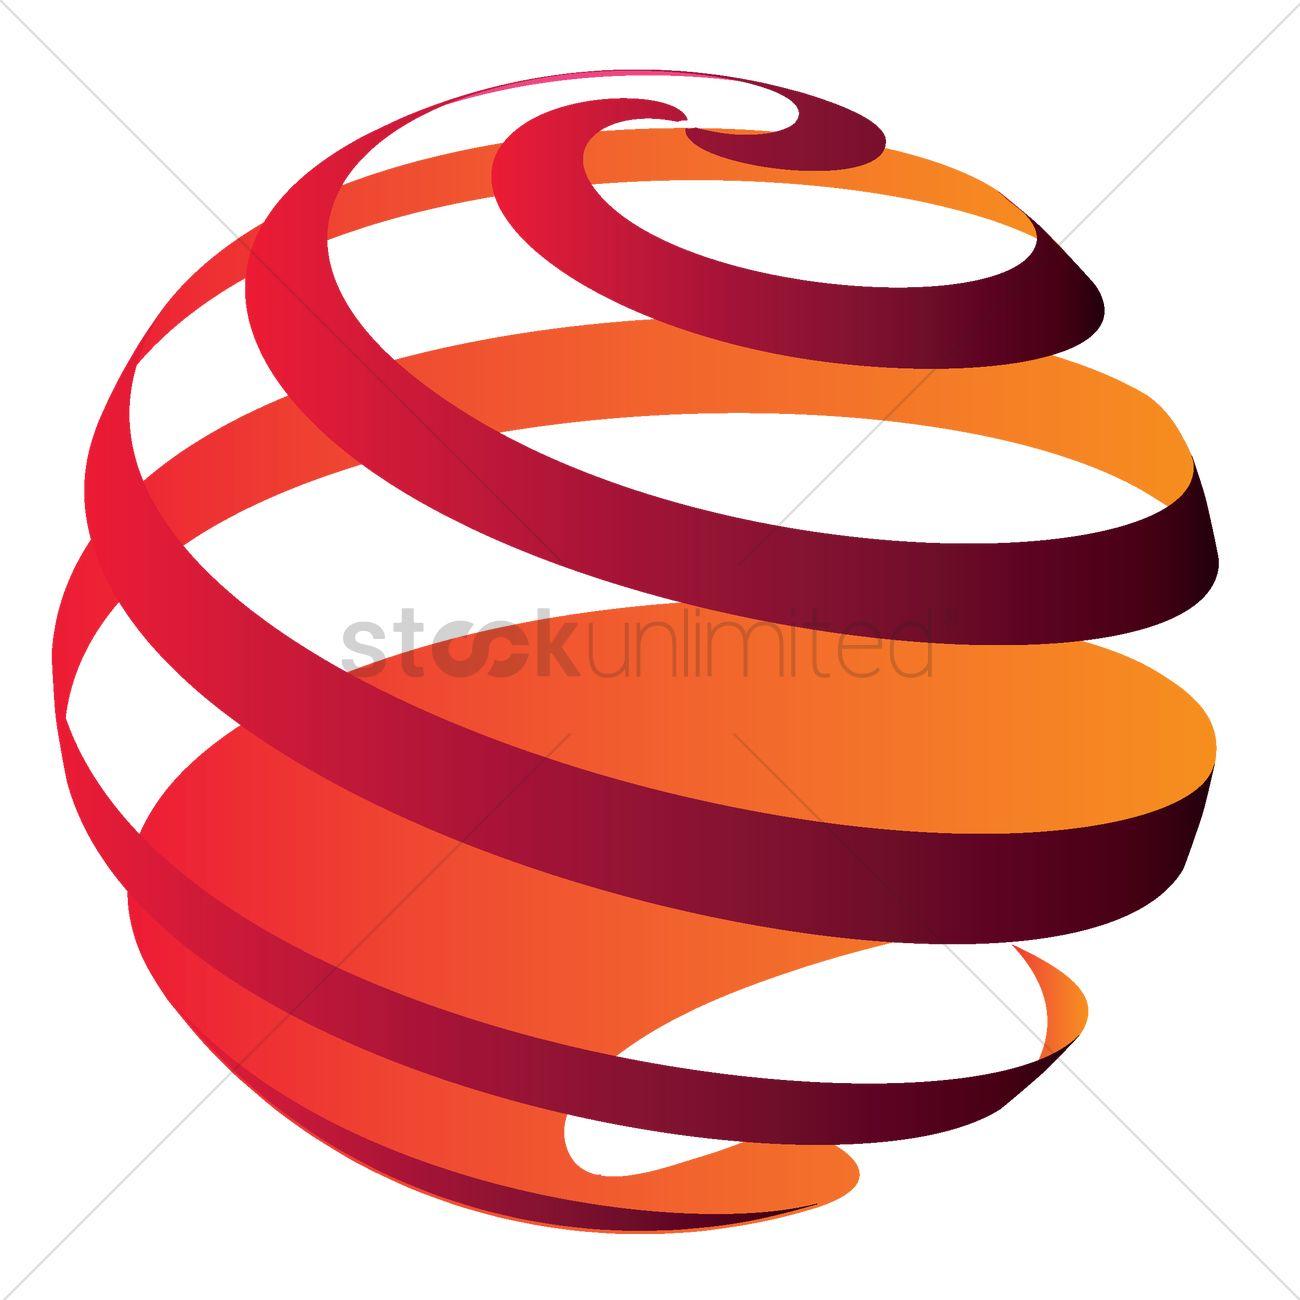 Red Spiral Company Logo - Art Shape Shapes Element Elements Pattern Patterns Creative Artistic ...